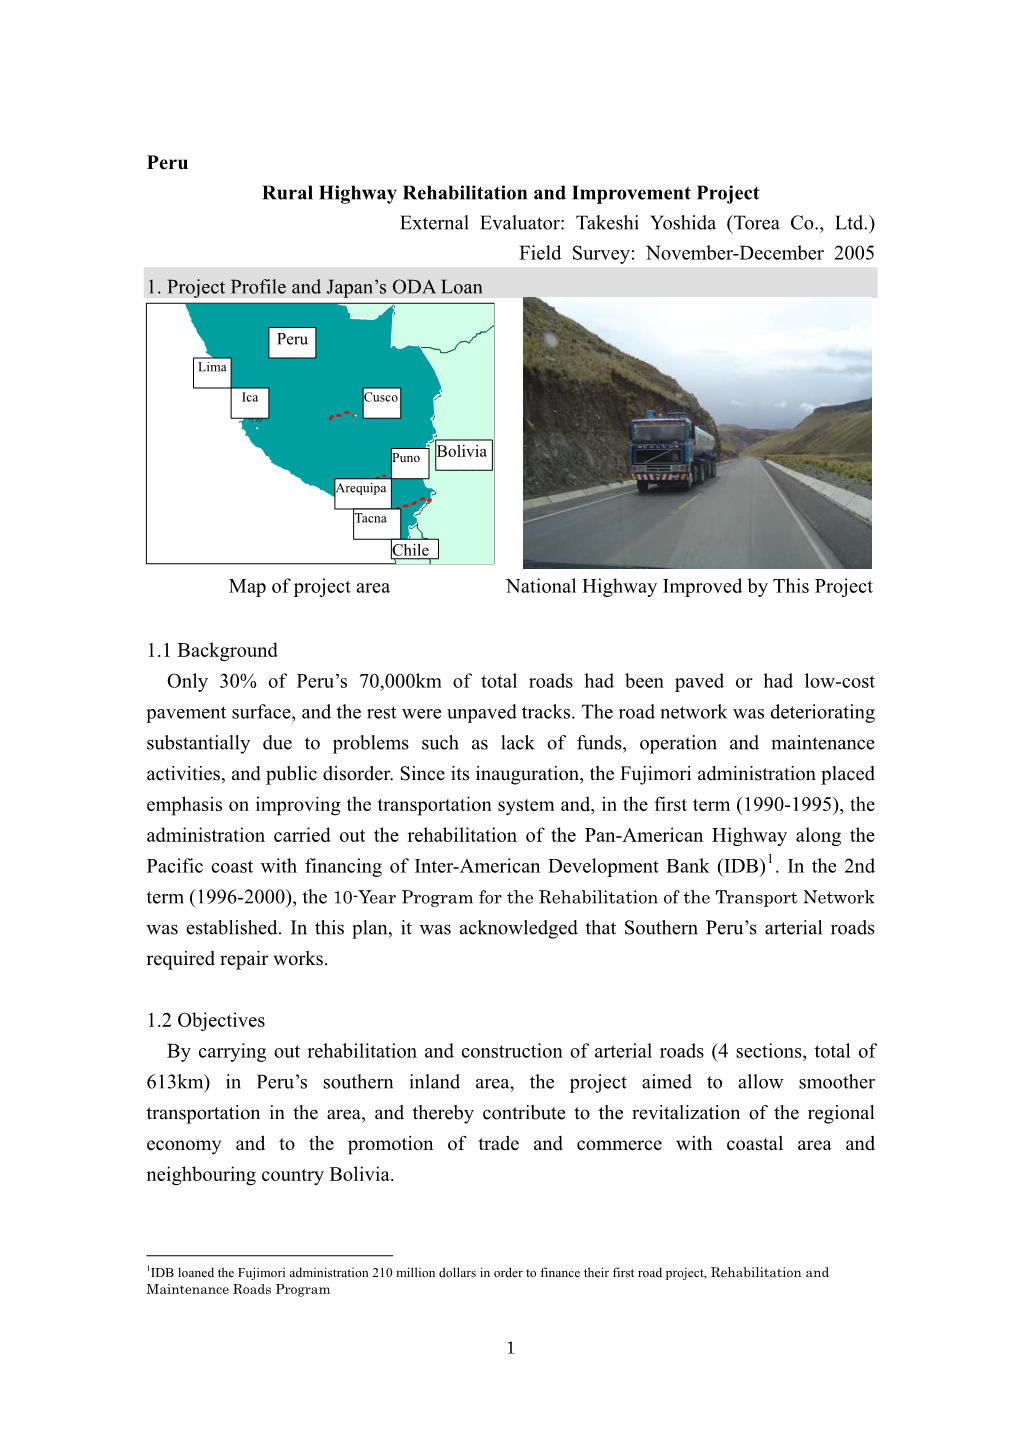 Peru Rural Highway Rehabilitation and Improvement Project External Evaluator: Takeshi Yoshida (Torea Co., Ltd.) Field Survey: November-December 2005 1